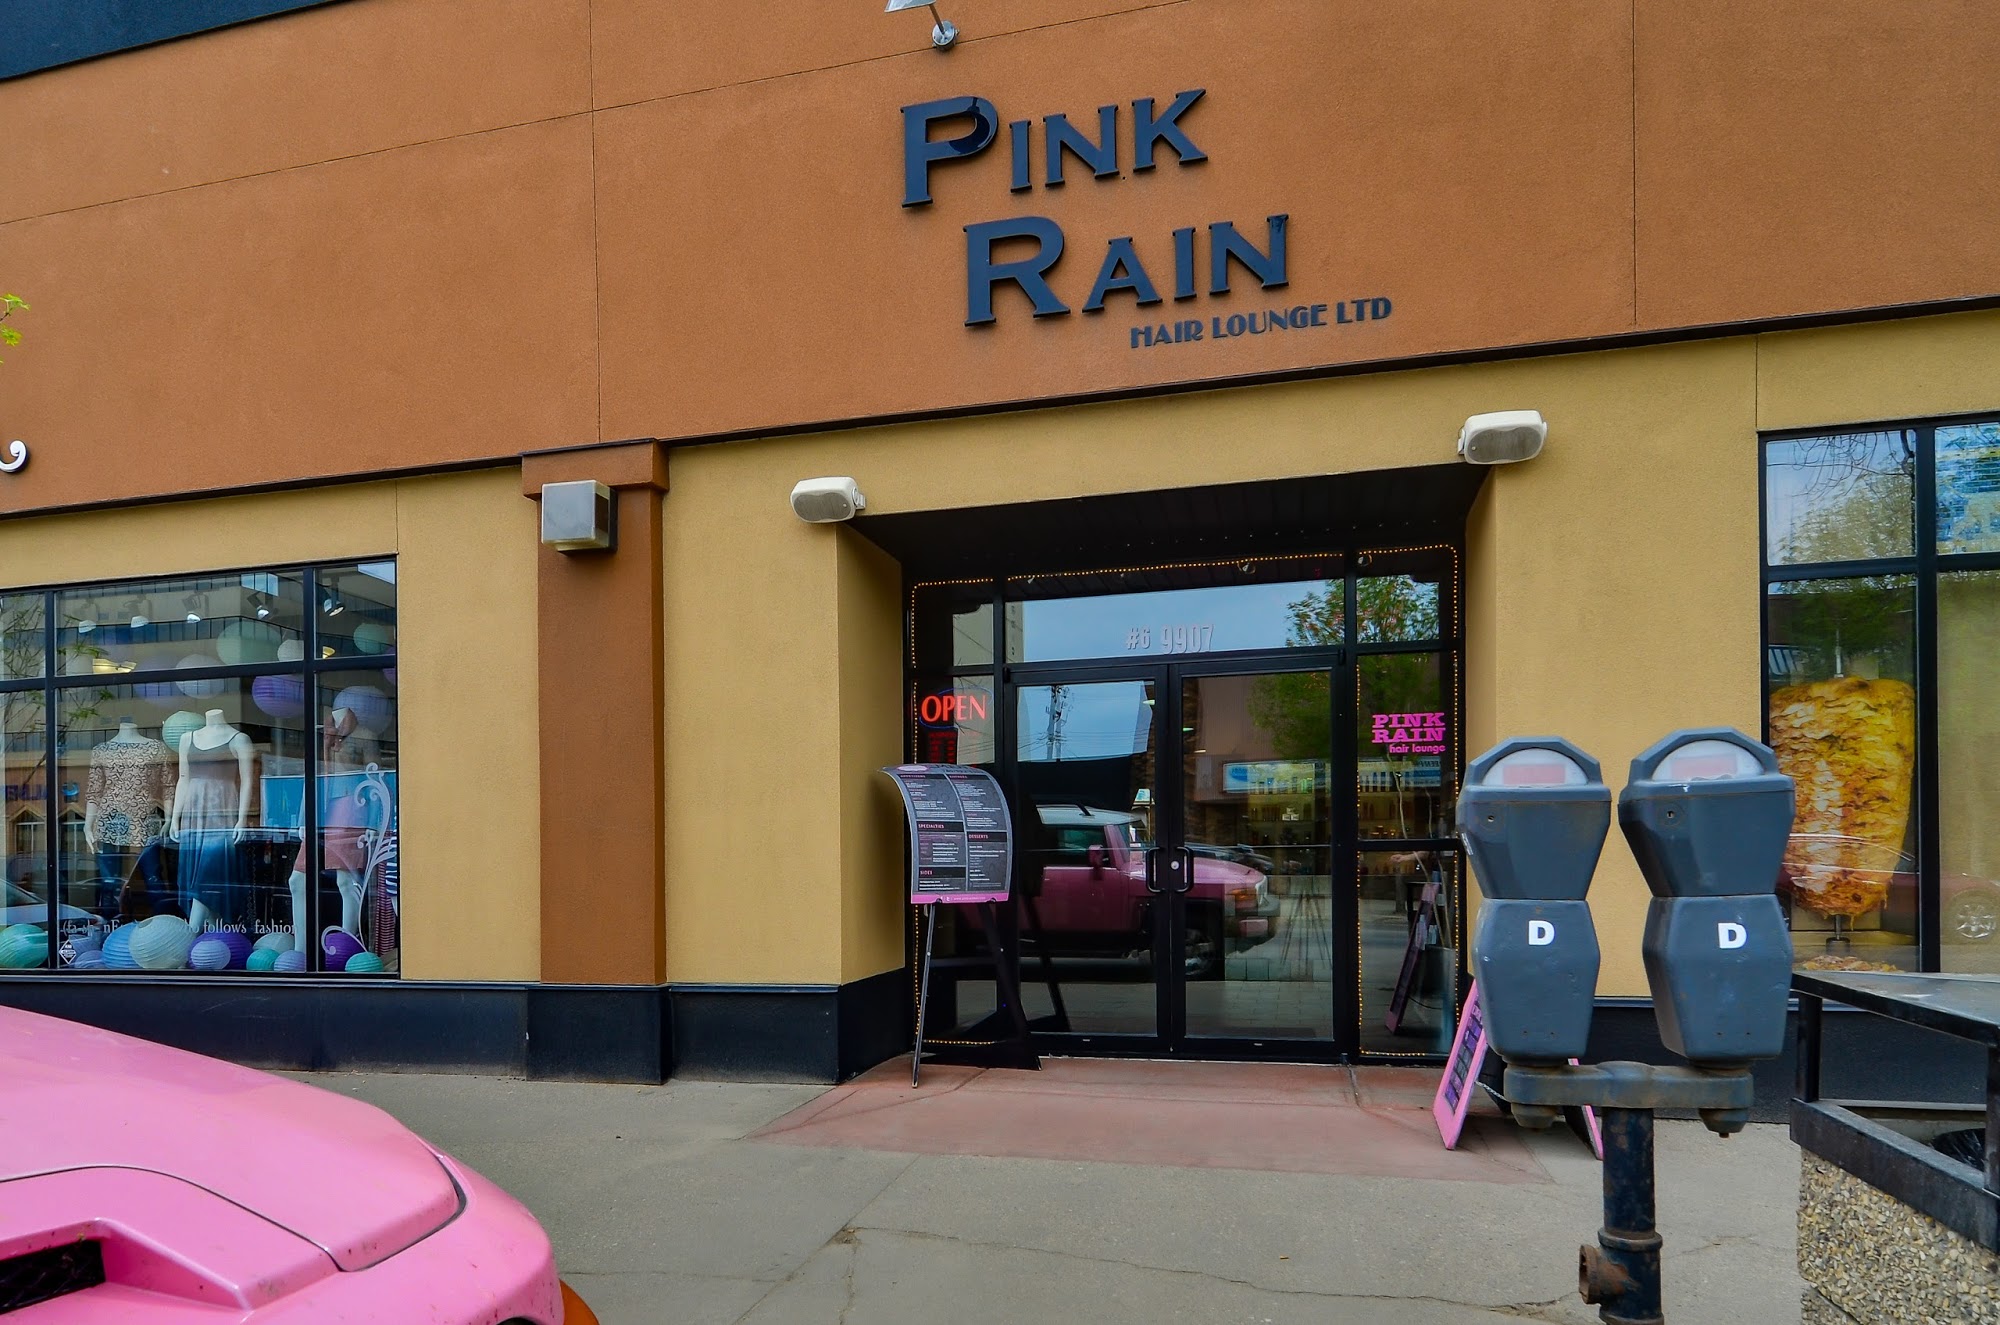 Pink Rain Hair Lounge